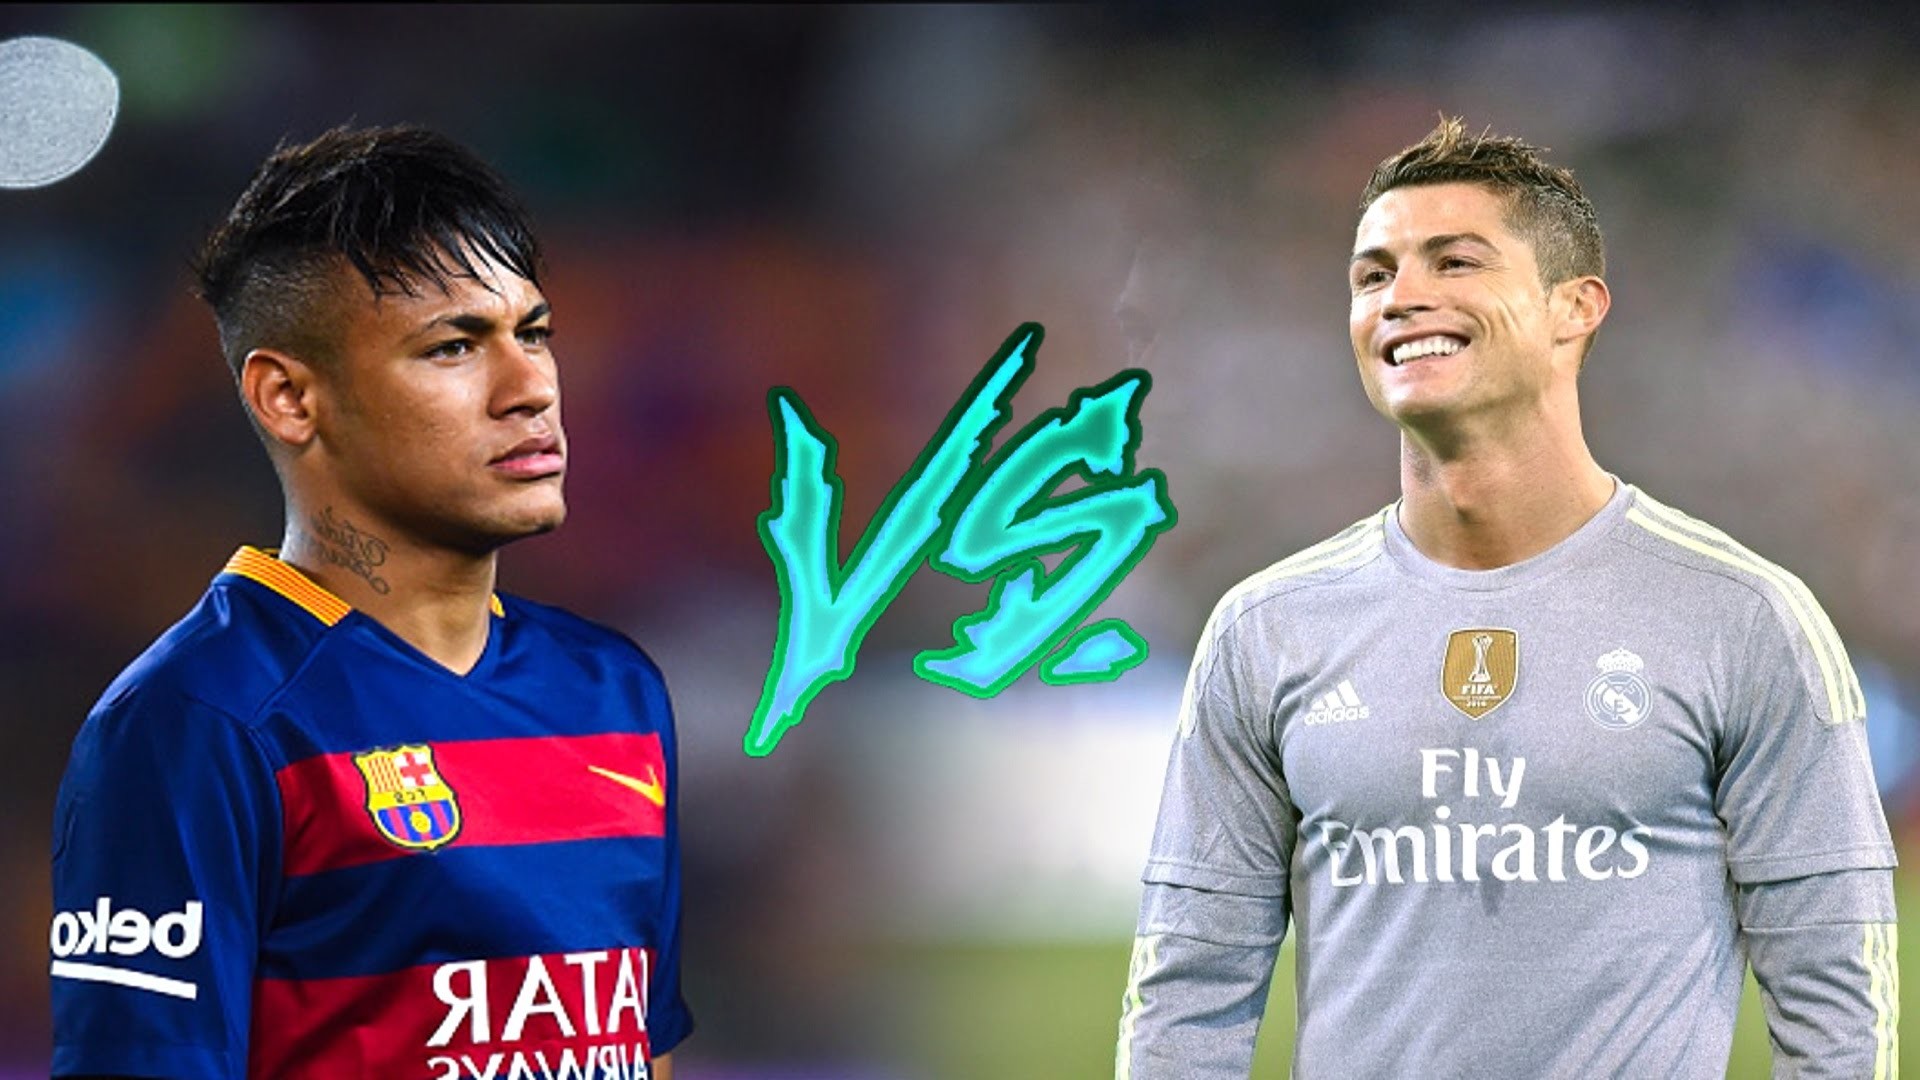 1920x1080 Cristiano Ronaldo vs Neymar JR â Magic Skills Show | 2015/16 HD - YouTube